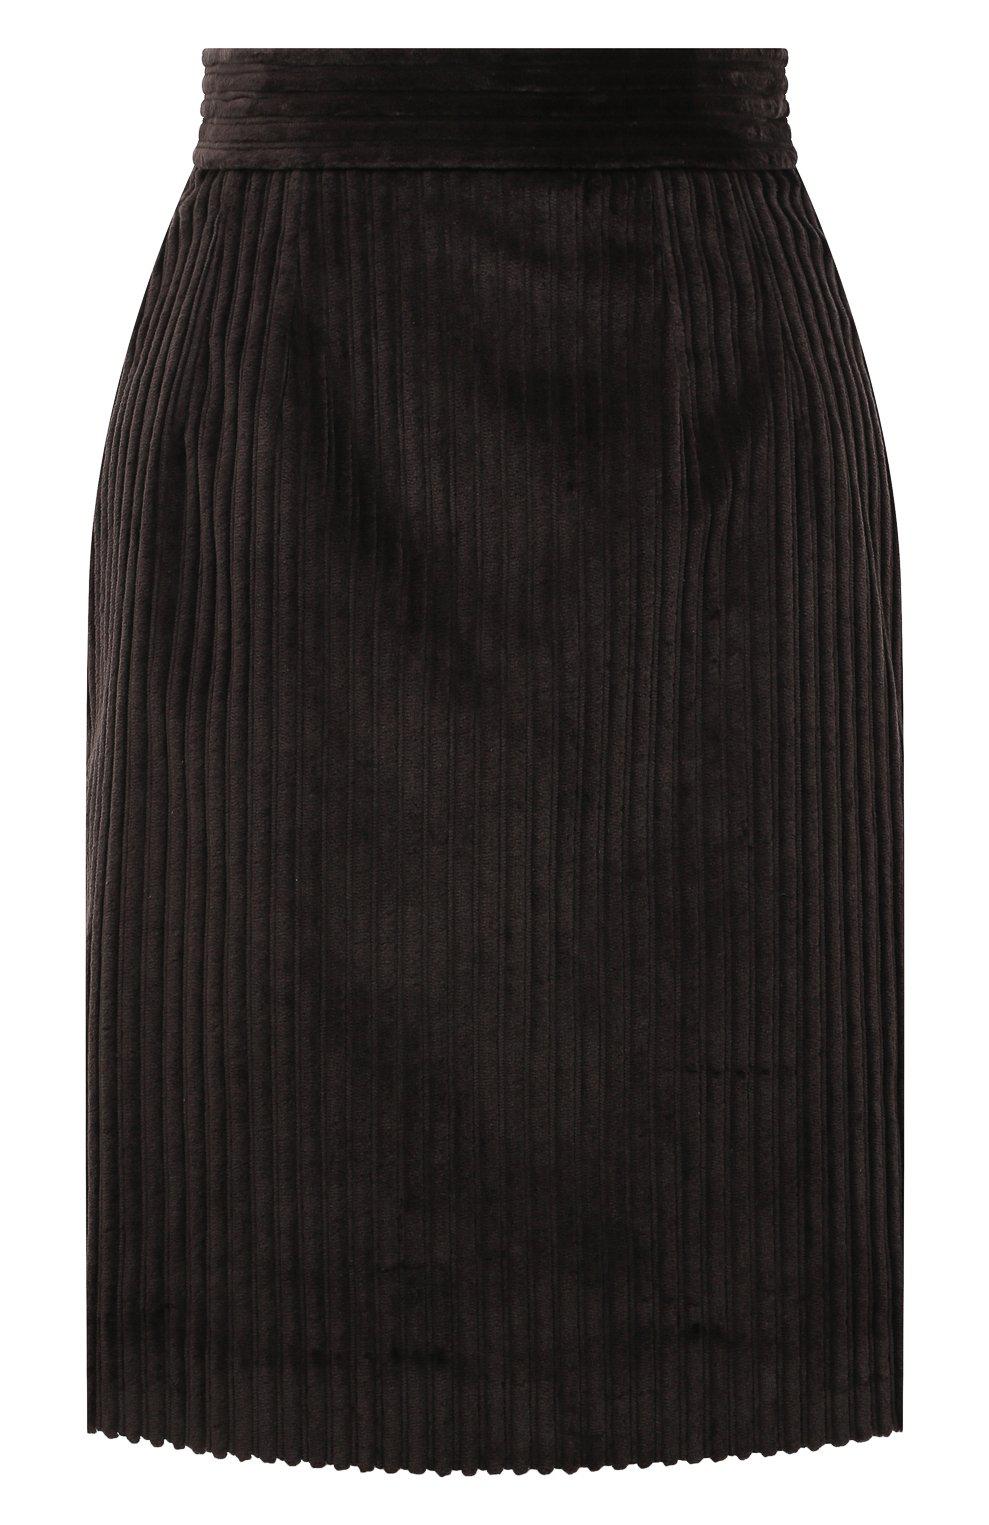 Corduroy skirt, Dolce &  Gabbana, 111,500 rub.